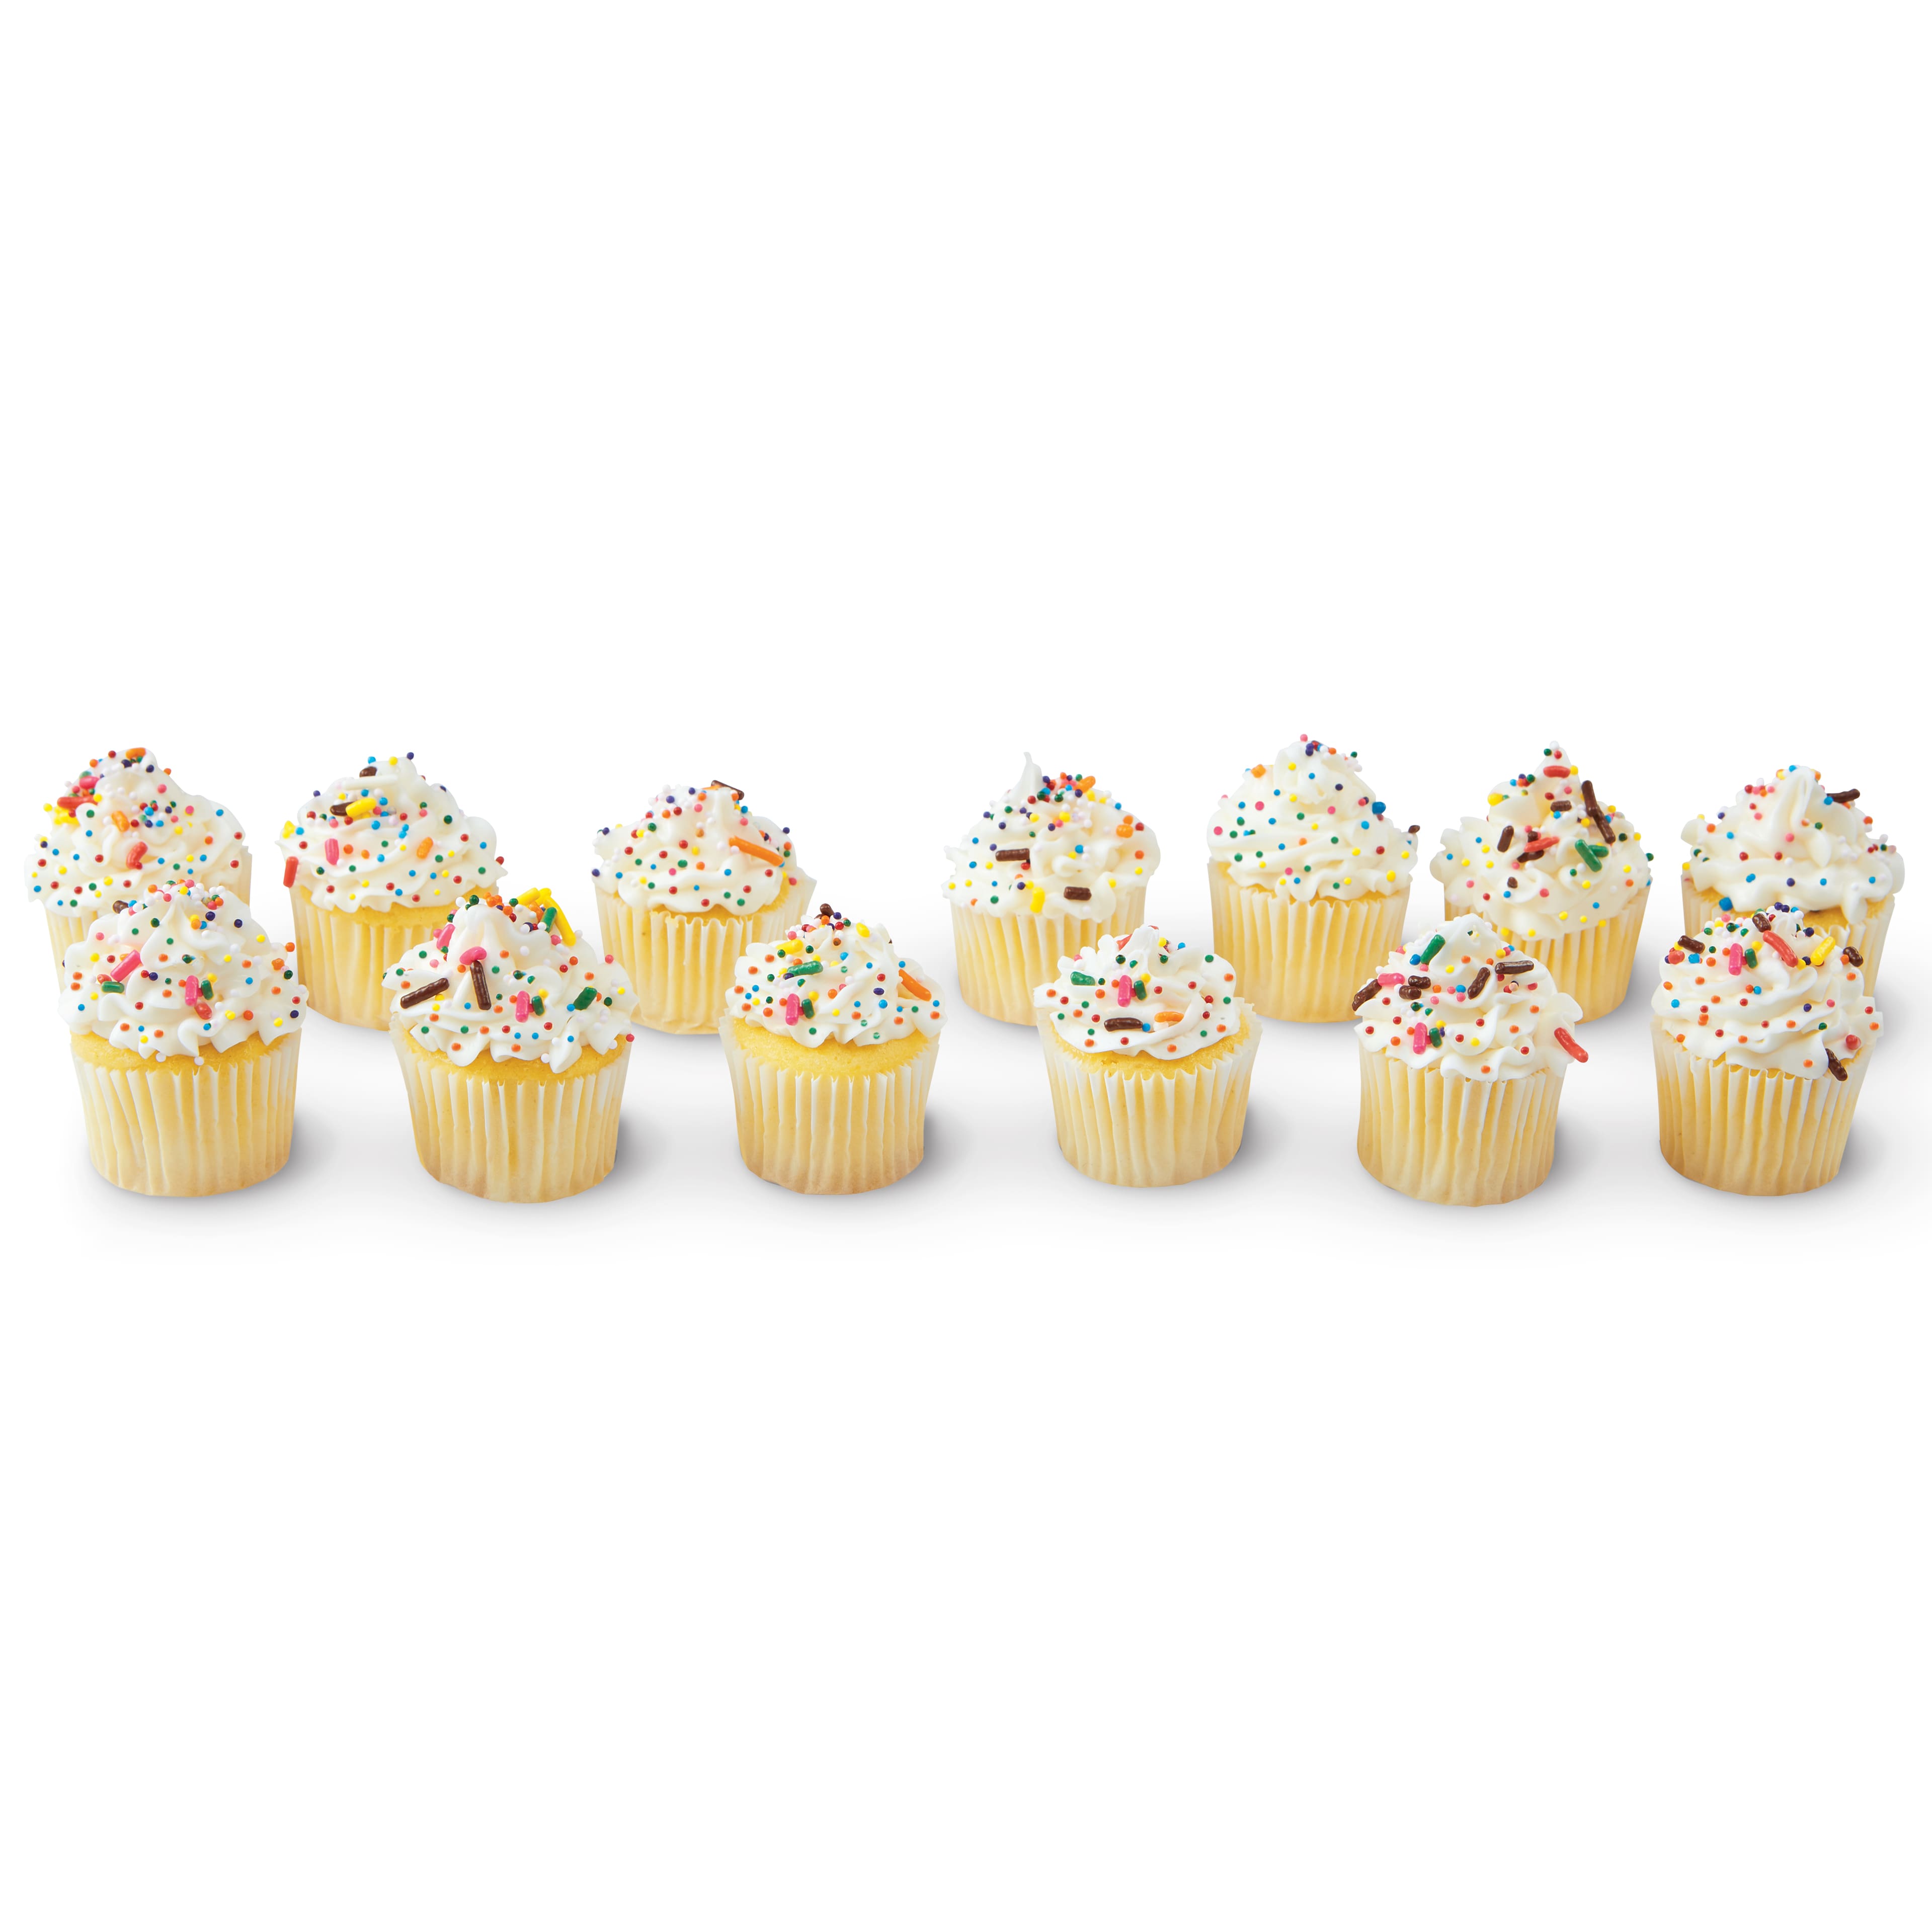 Non-Stick 24-Cavity Muffin Pan by Celebrate It, Size: 21.5 x 1.2 x 11.6, Gray